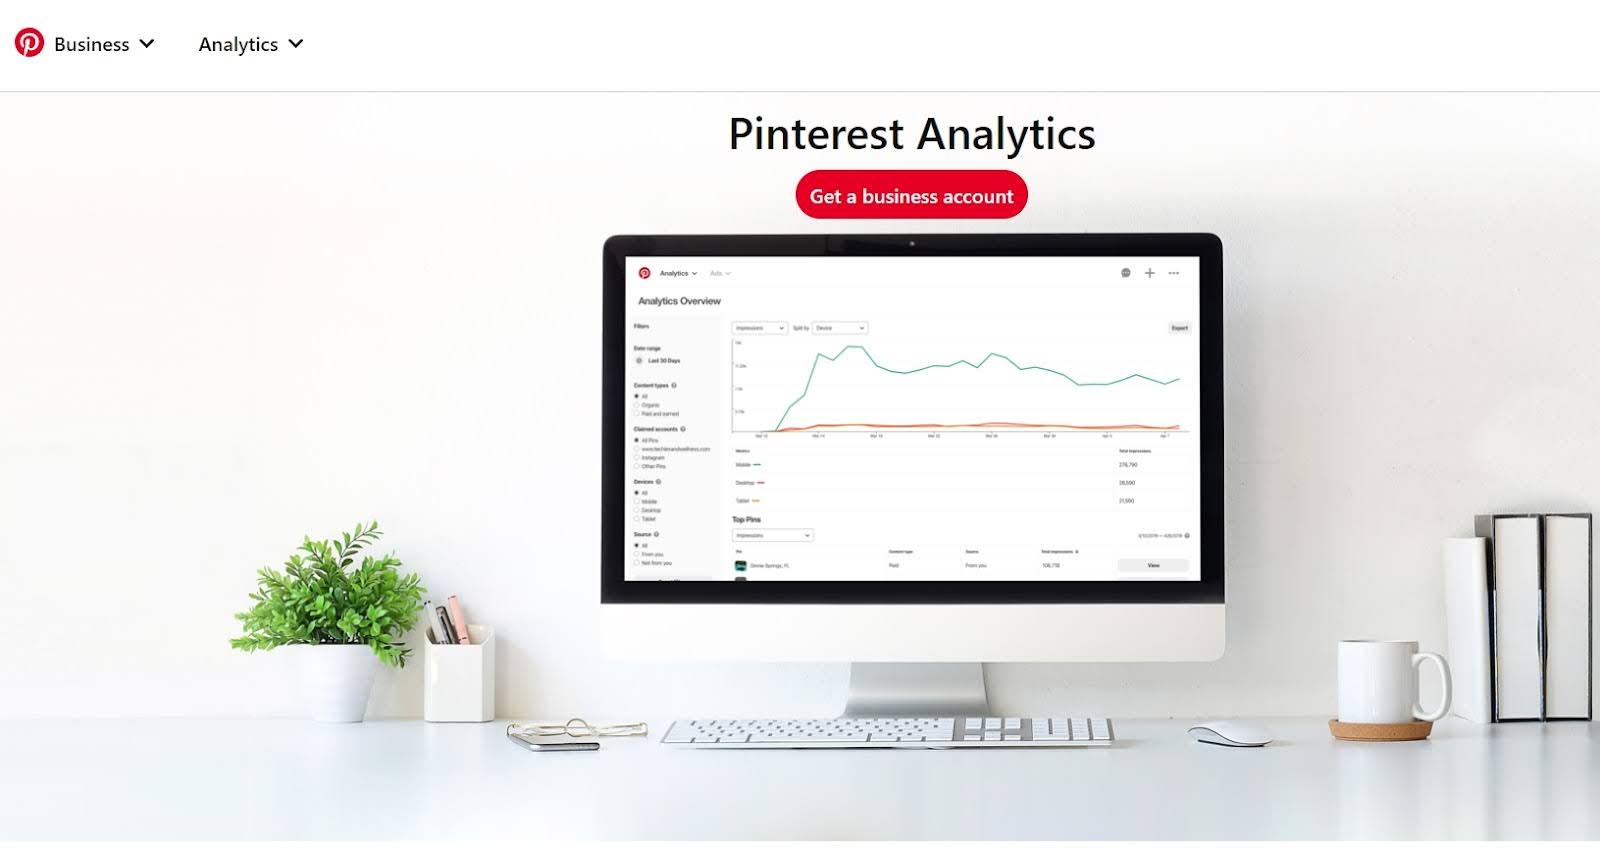 Pinterest analytics tool